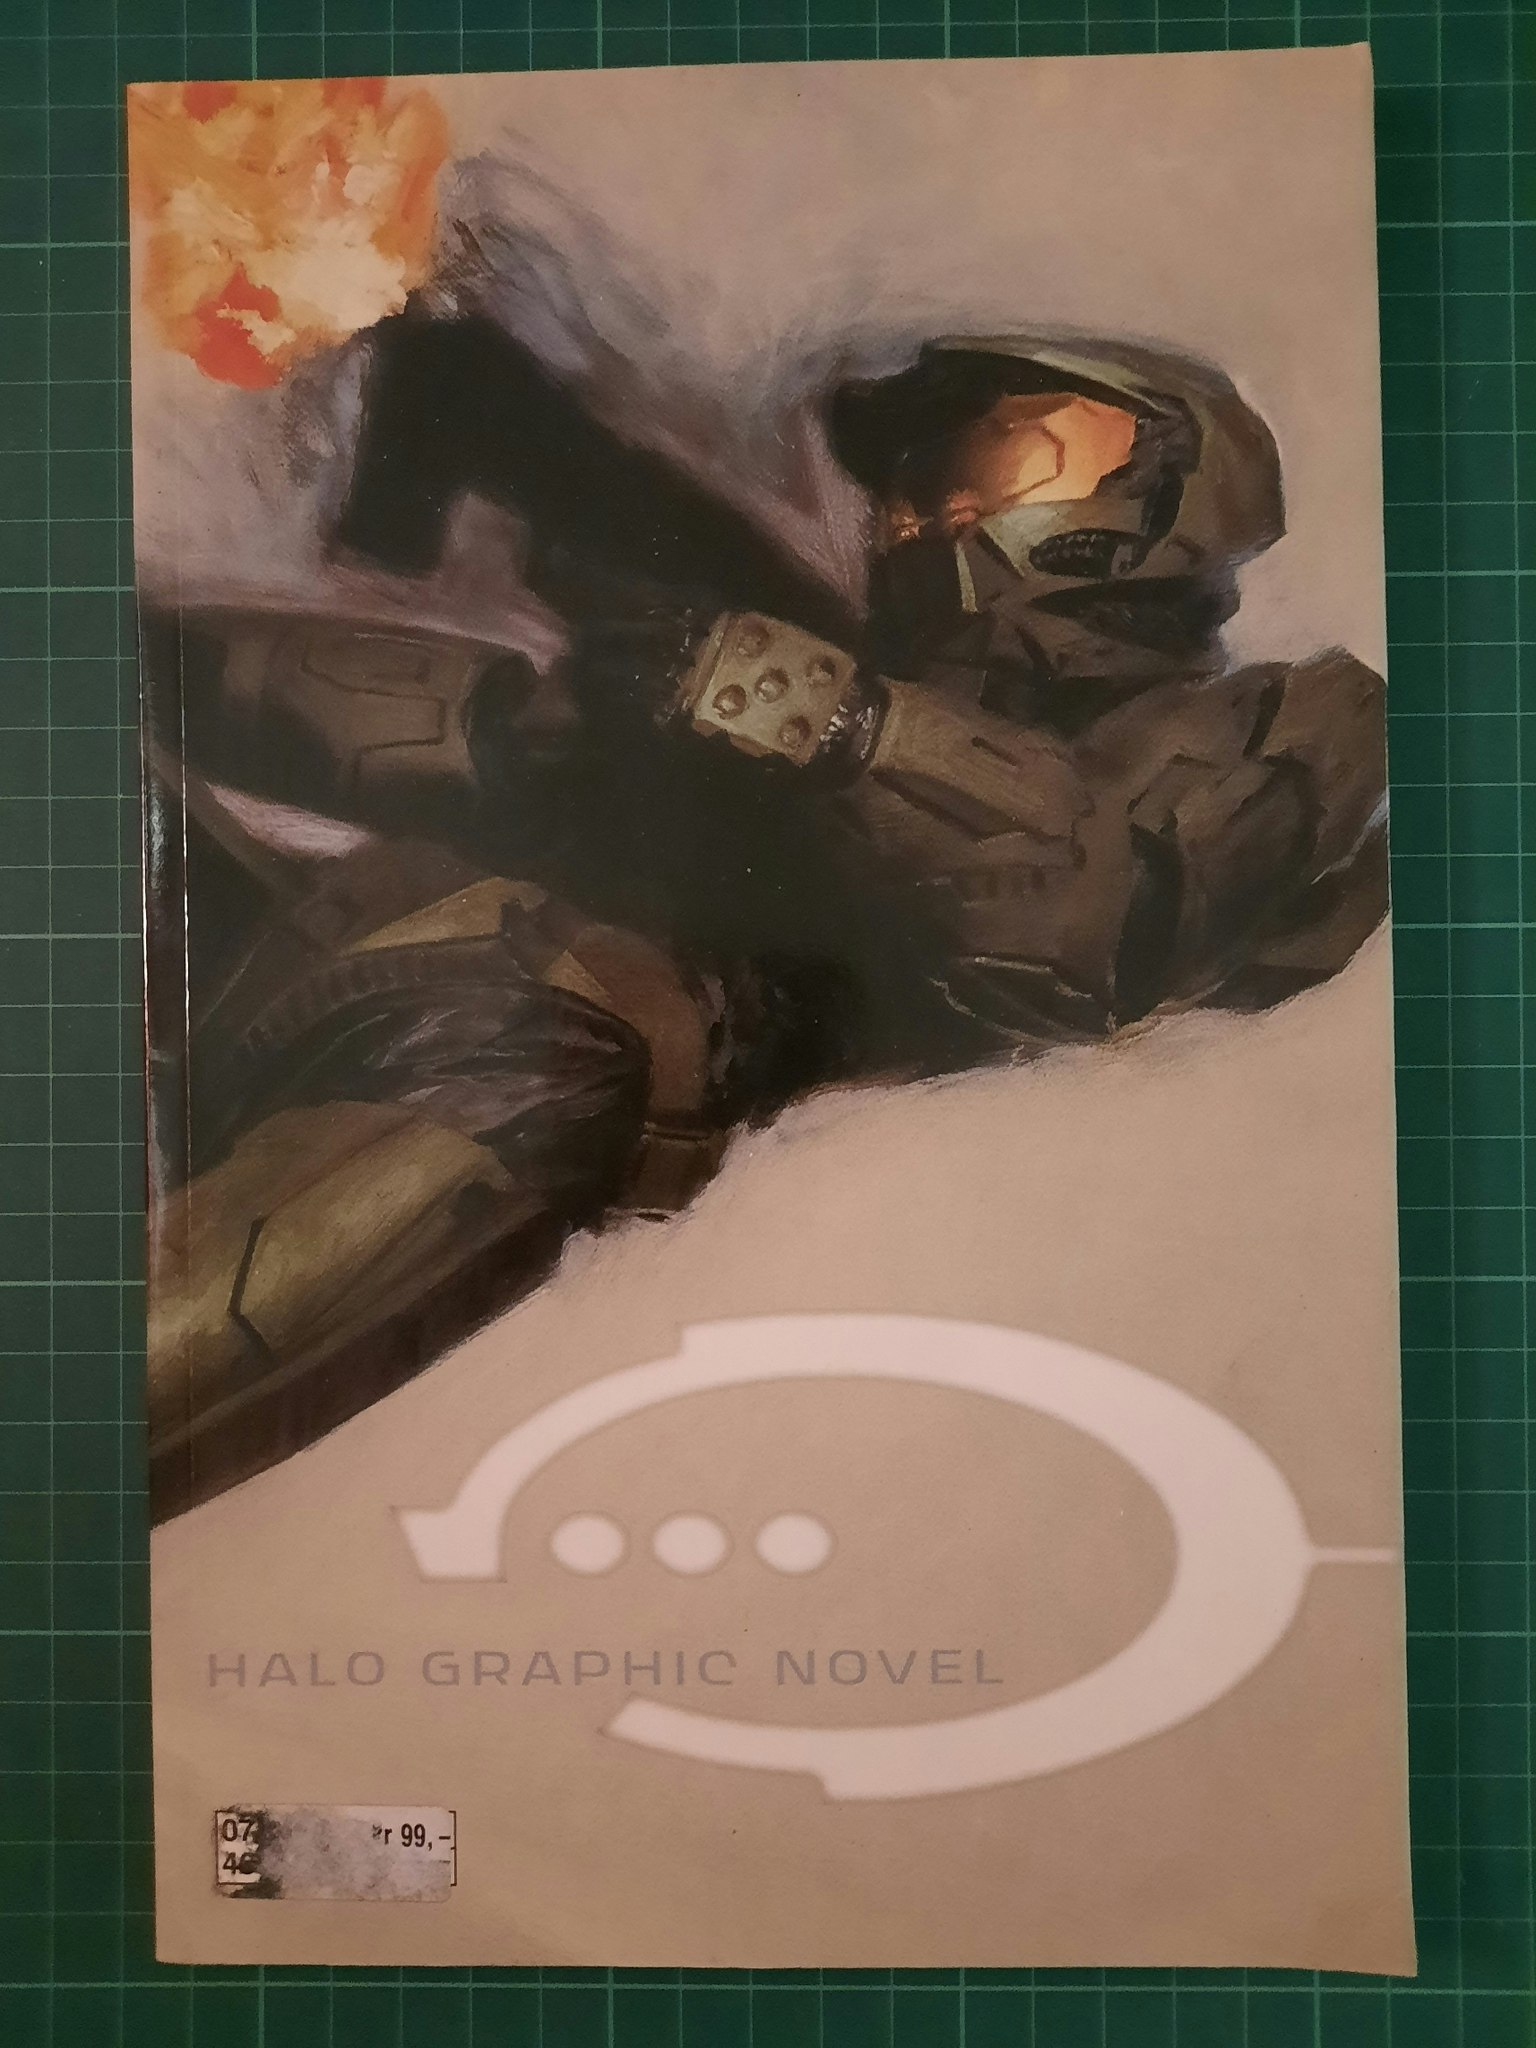 Halo graphic novel (Norsk utgave)